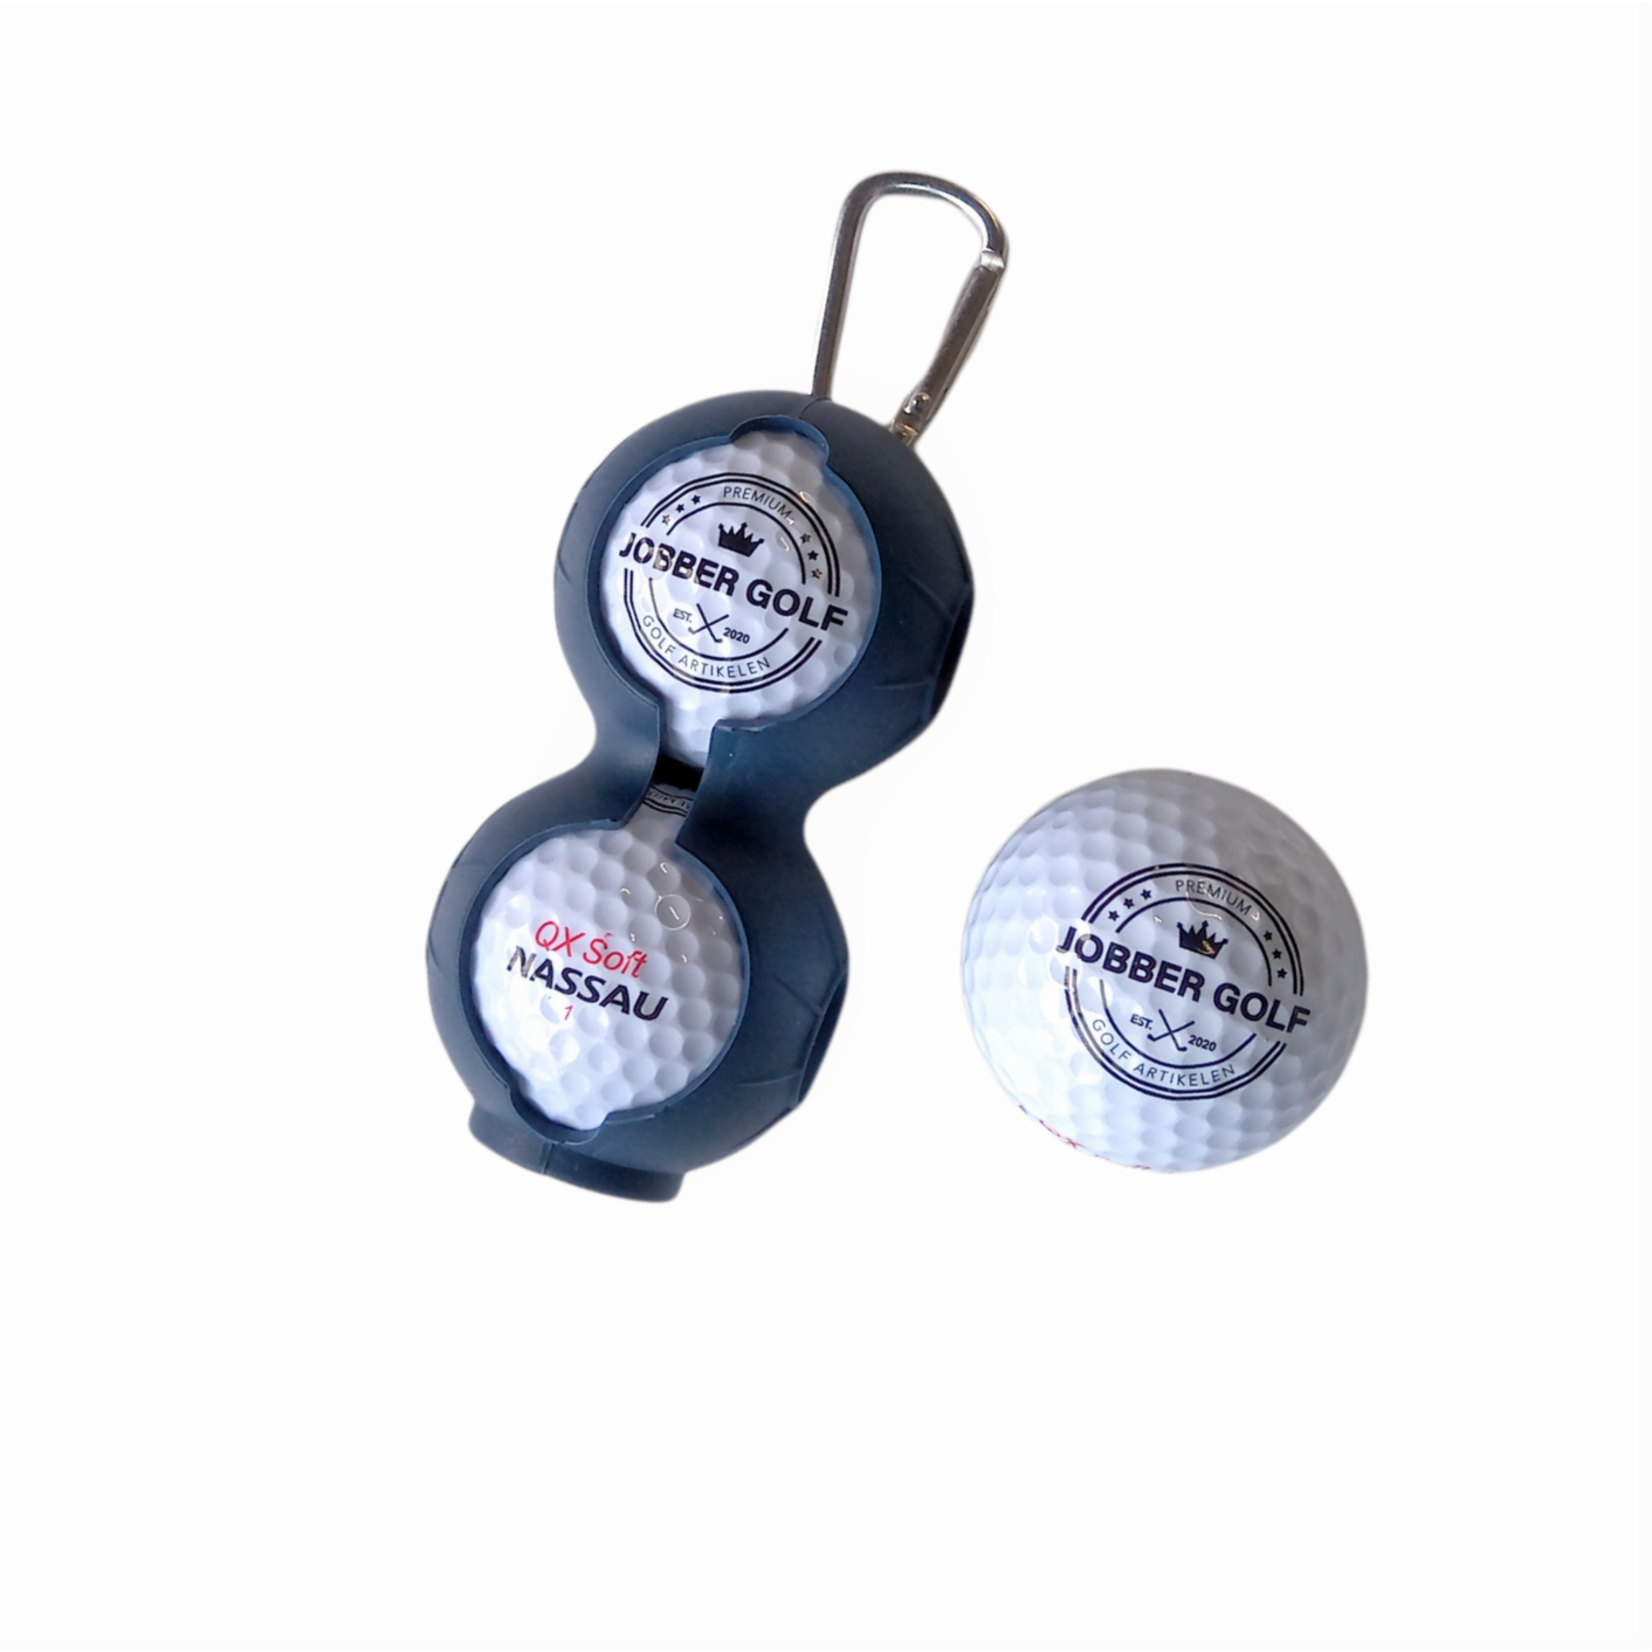 Jobber Golf golfballen met houder - Golfbal houder - Golf accessoires